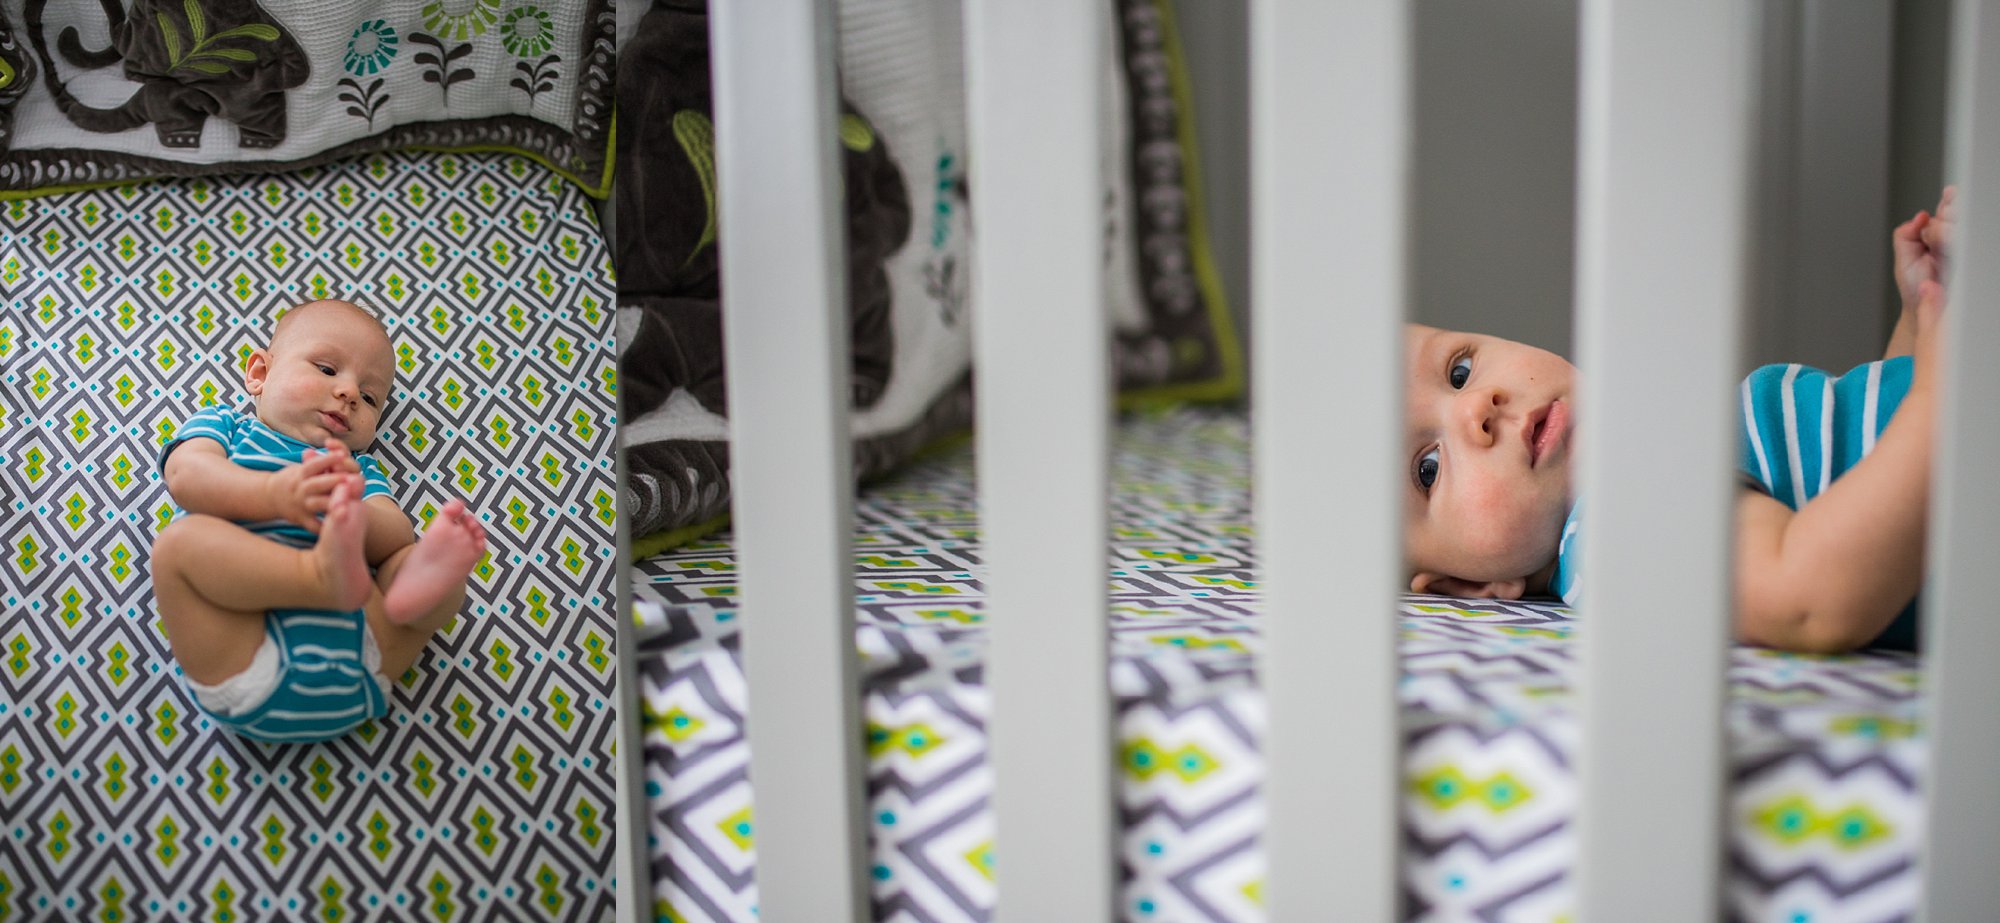 Jennifer Blaak Photography, Hamilton Newborn Photographer, Baby playing in crib